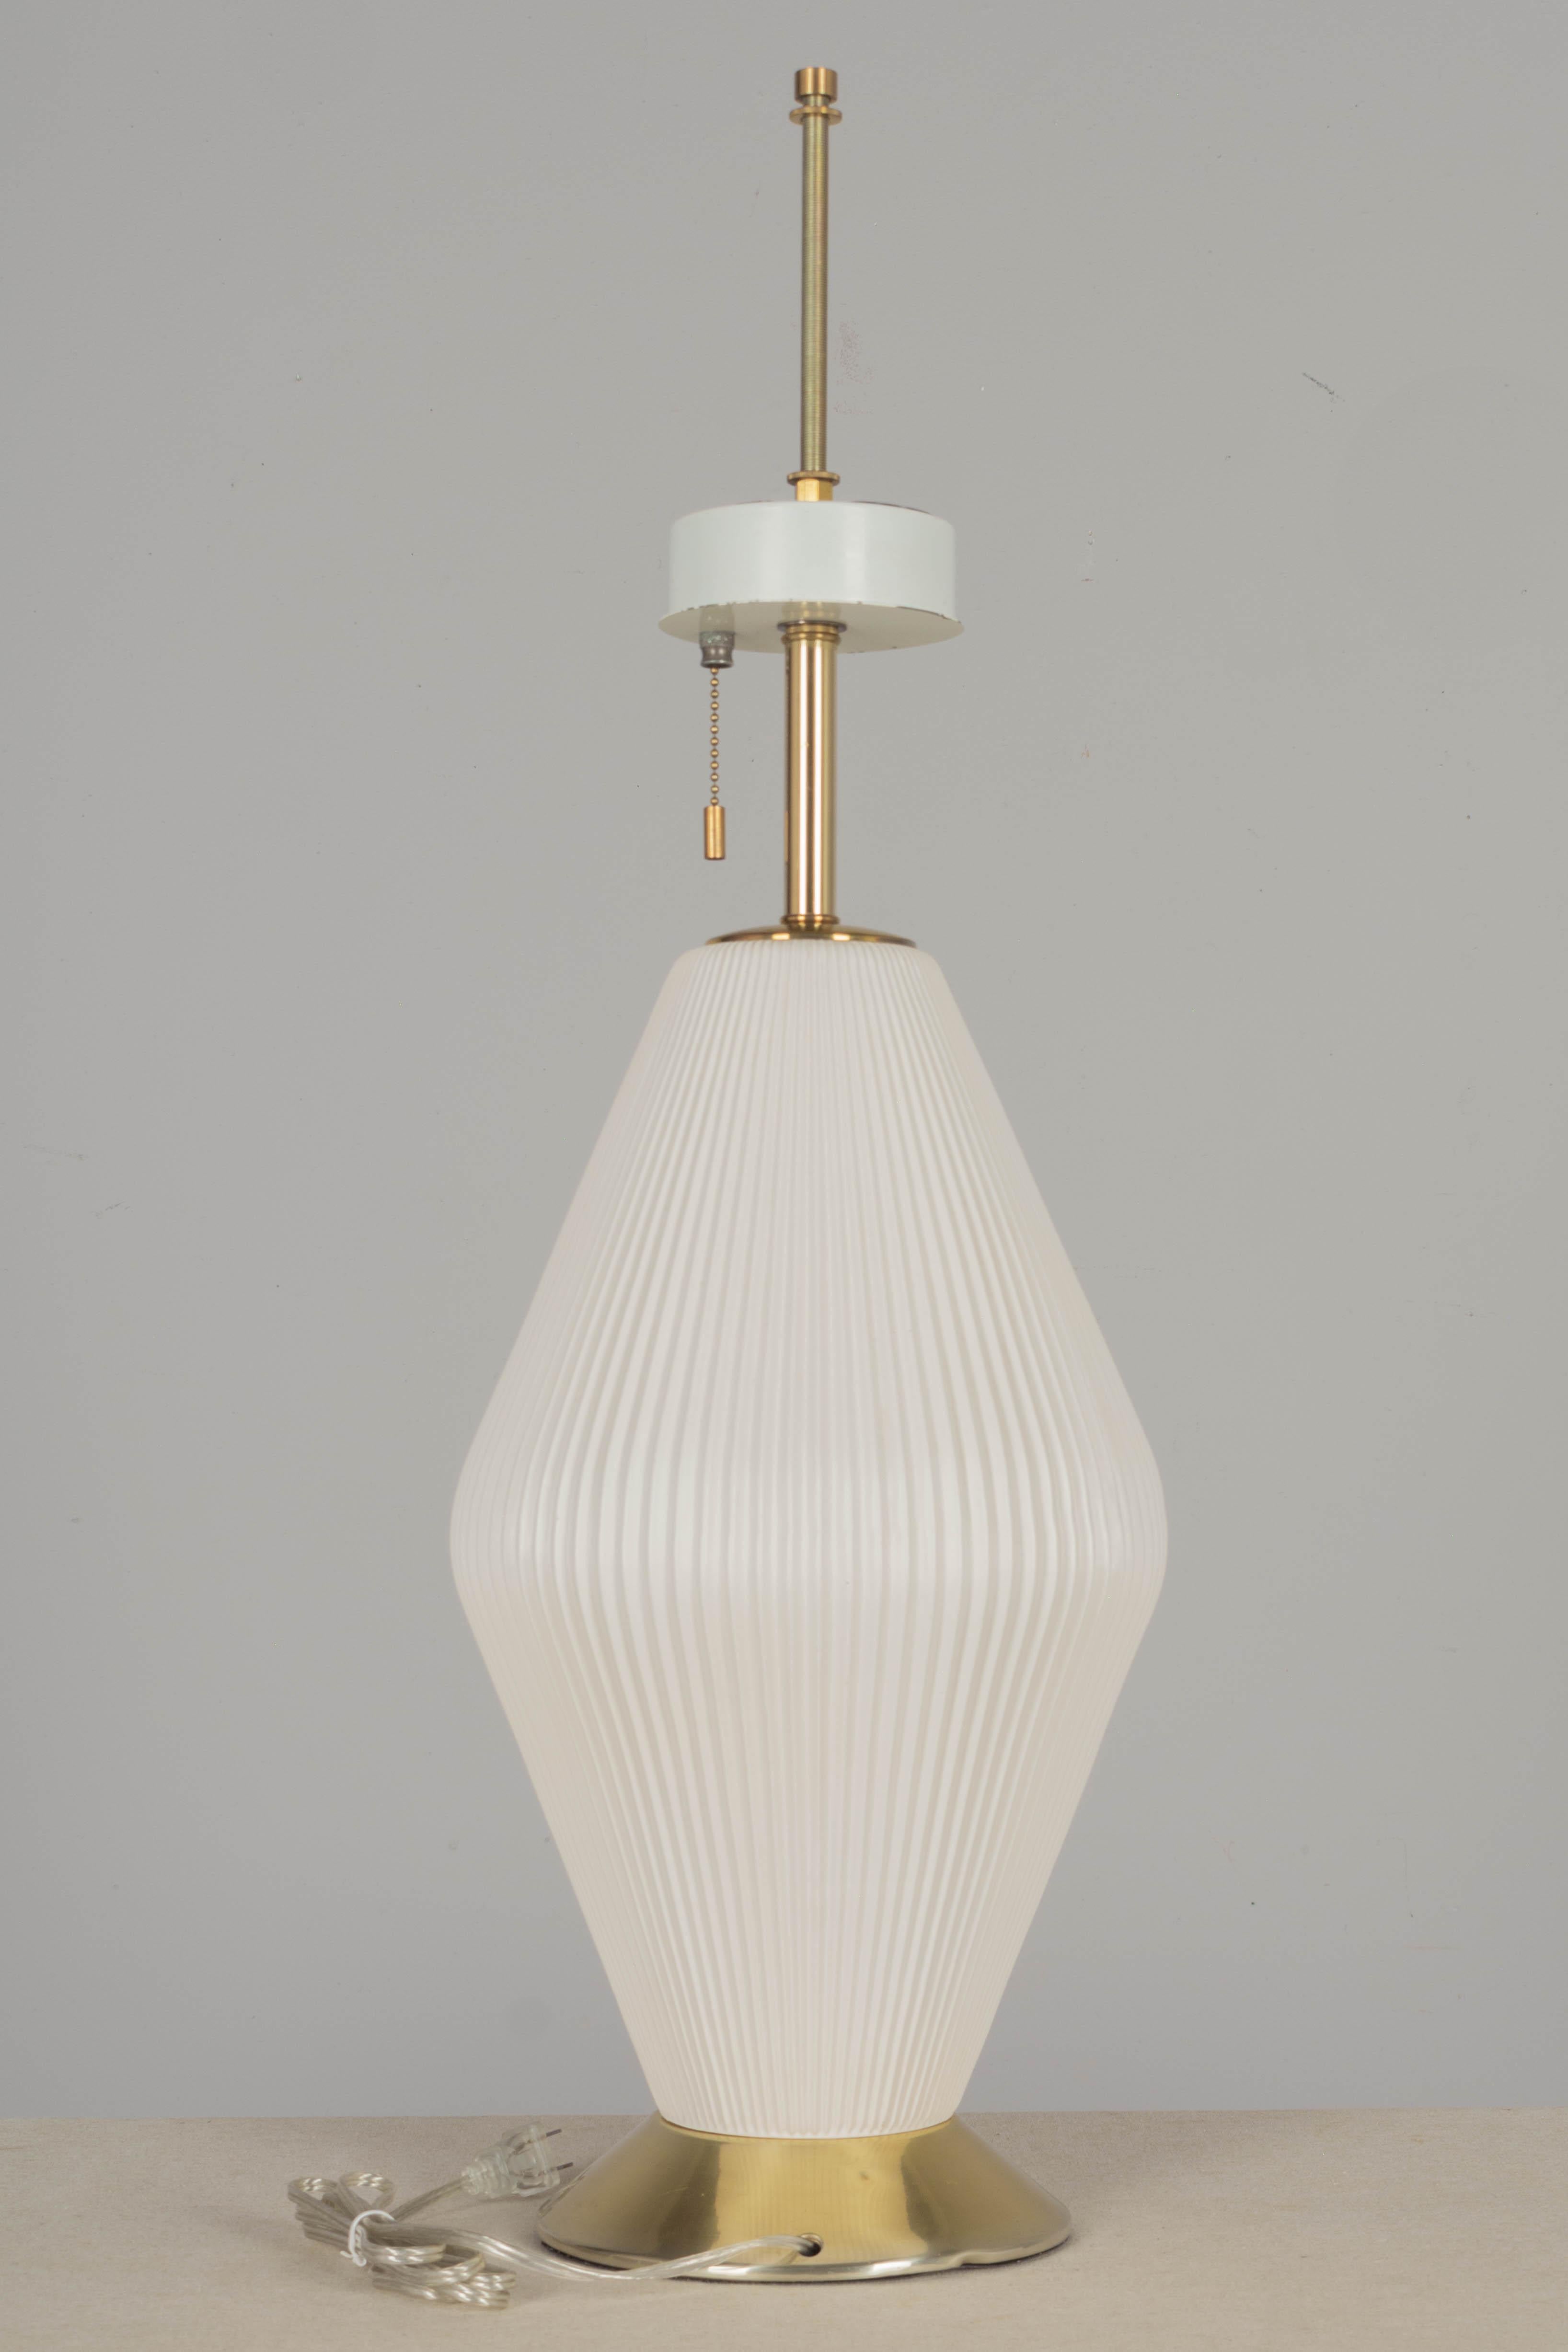 American Midcentury Gerald Thurston Lightolier Ceramic Lamp